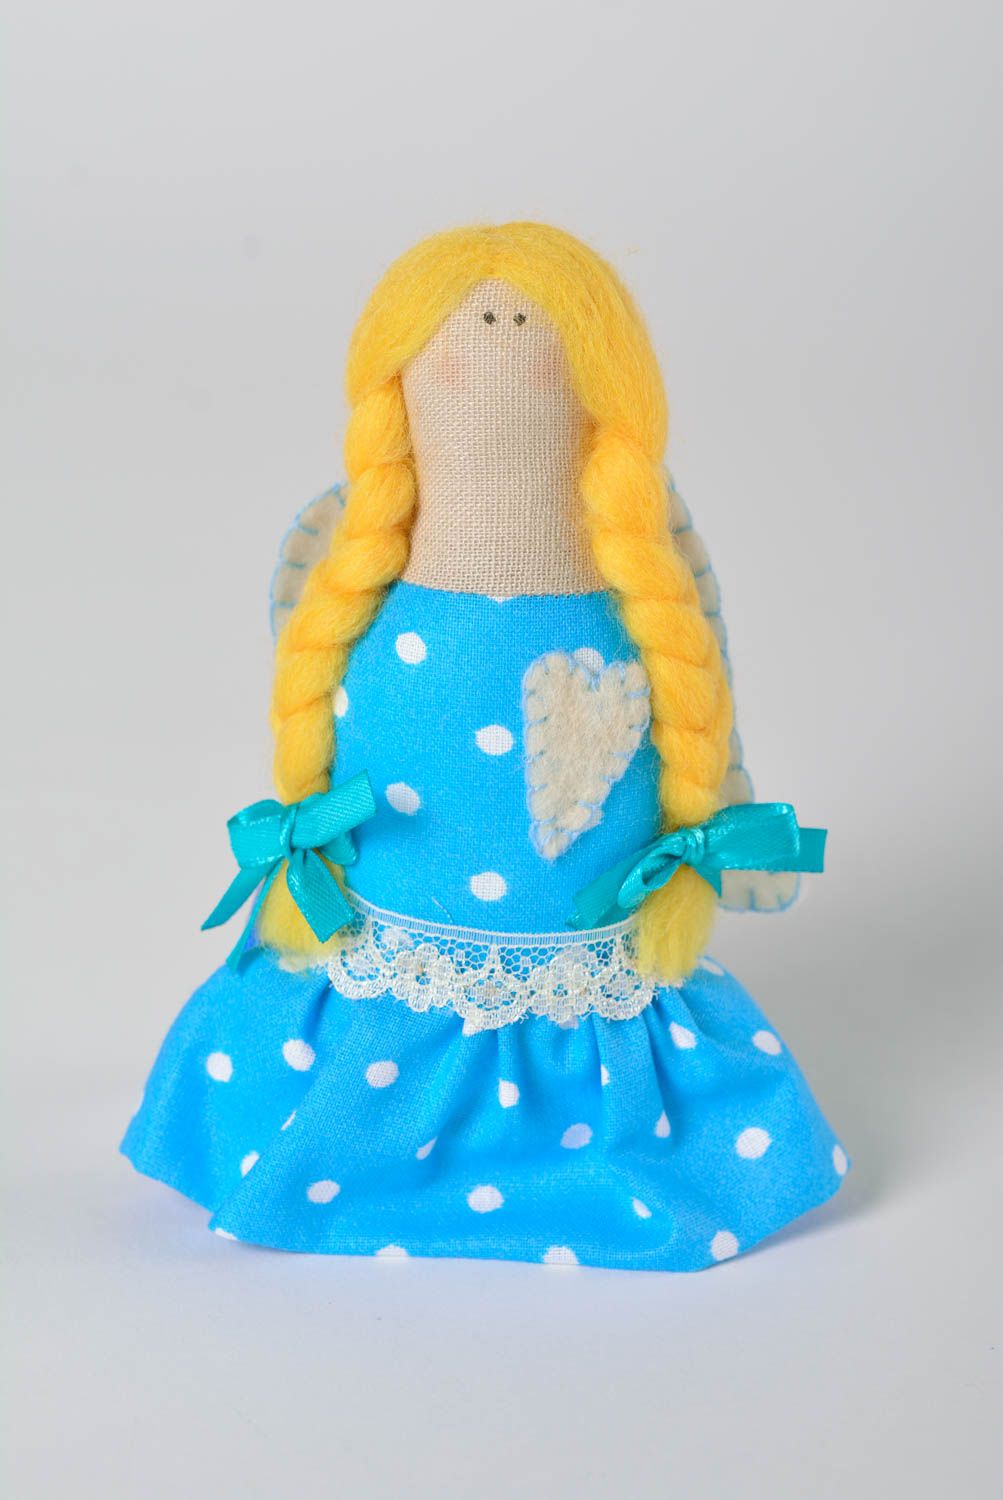 Decorative fabric doll handmade stuffed toy present for baby home decor ideas photo 1